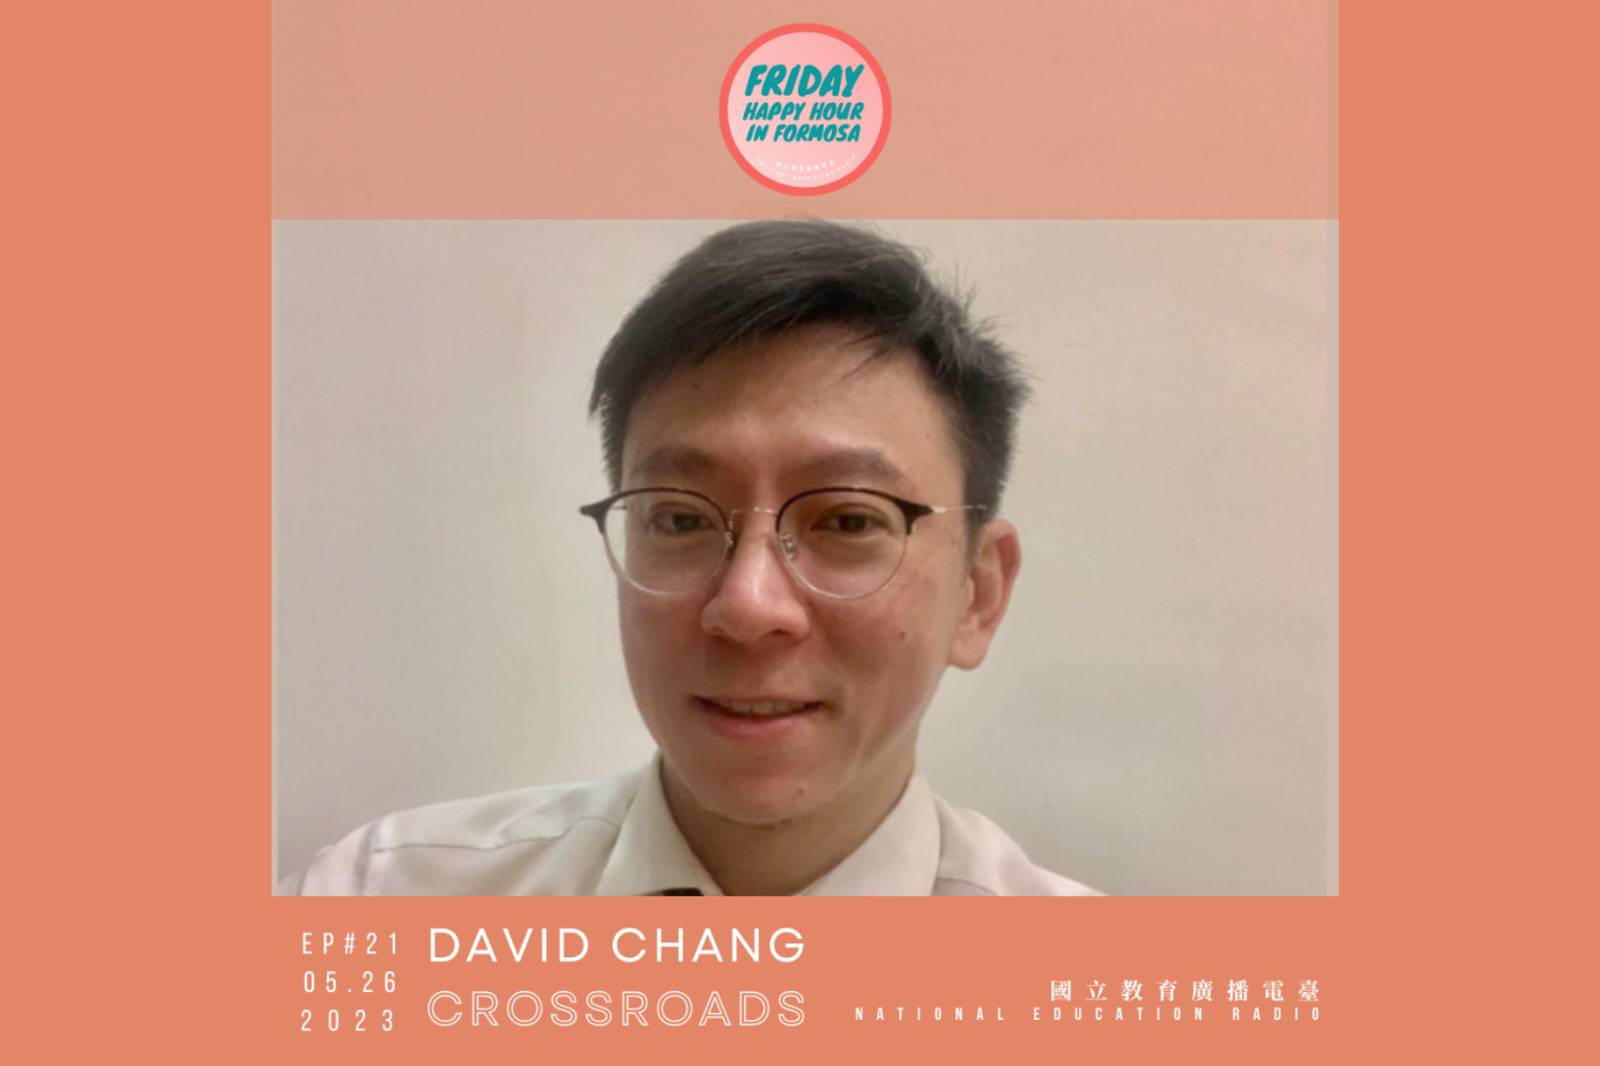 Crossroads社團法人台灣全球連結發展協會的秘書長 David Chang Part 1 * Crossroads' Disability Inclusion Initiative with David Chang - Part 1